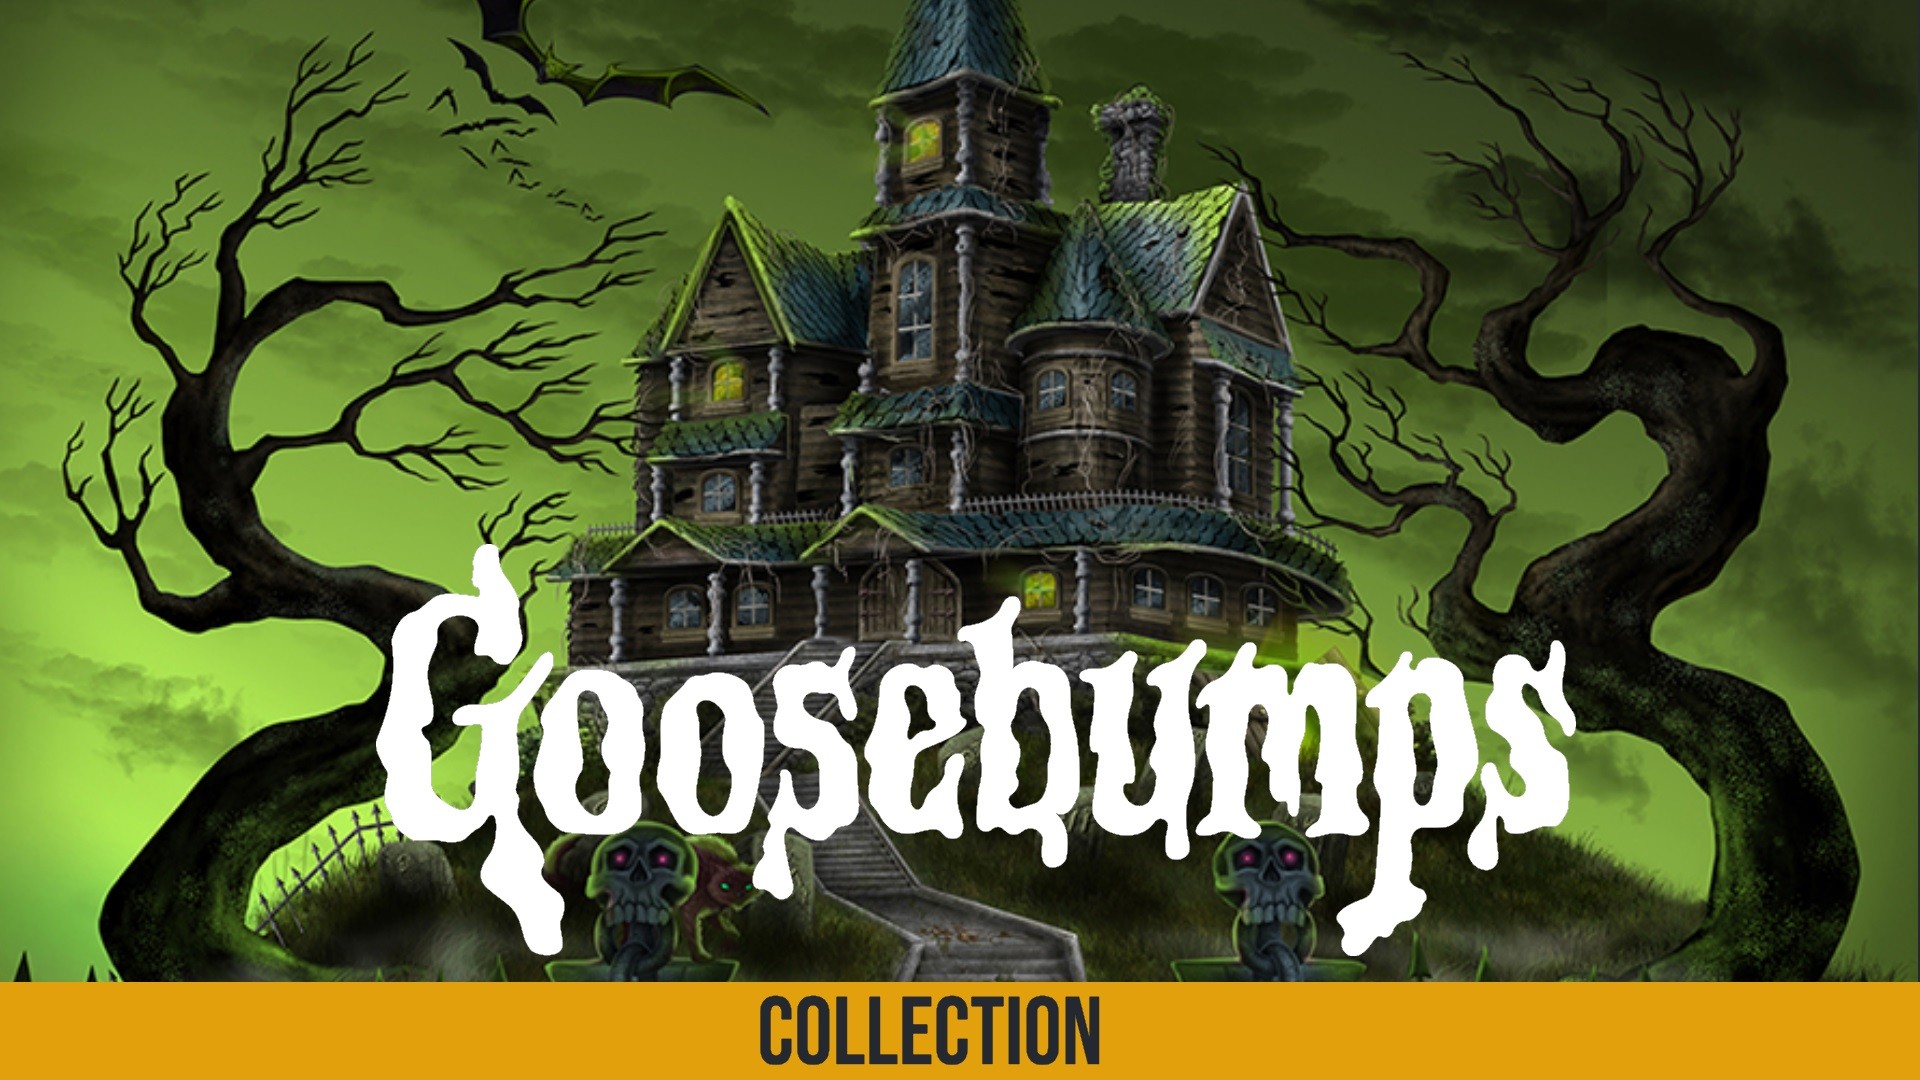 Goosebumps Background Plex Collection Posters